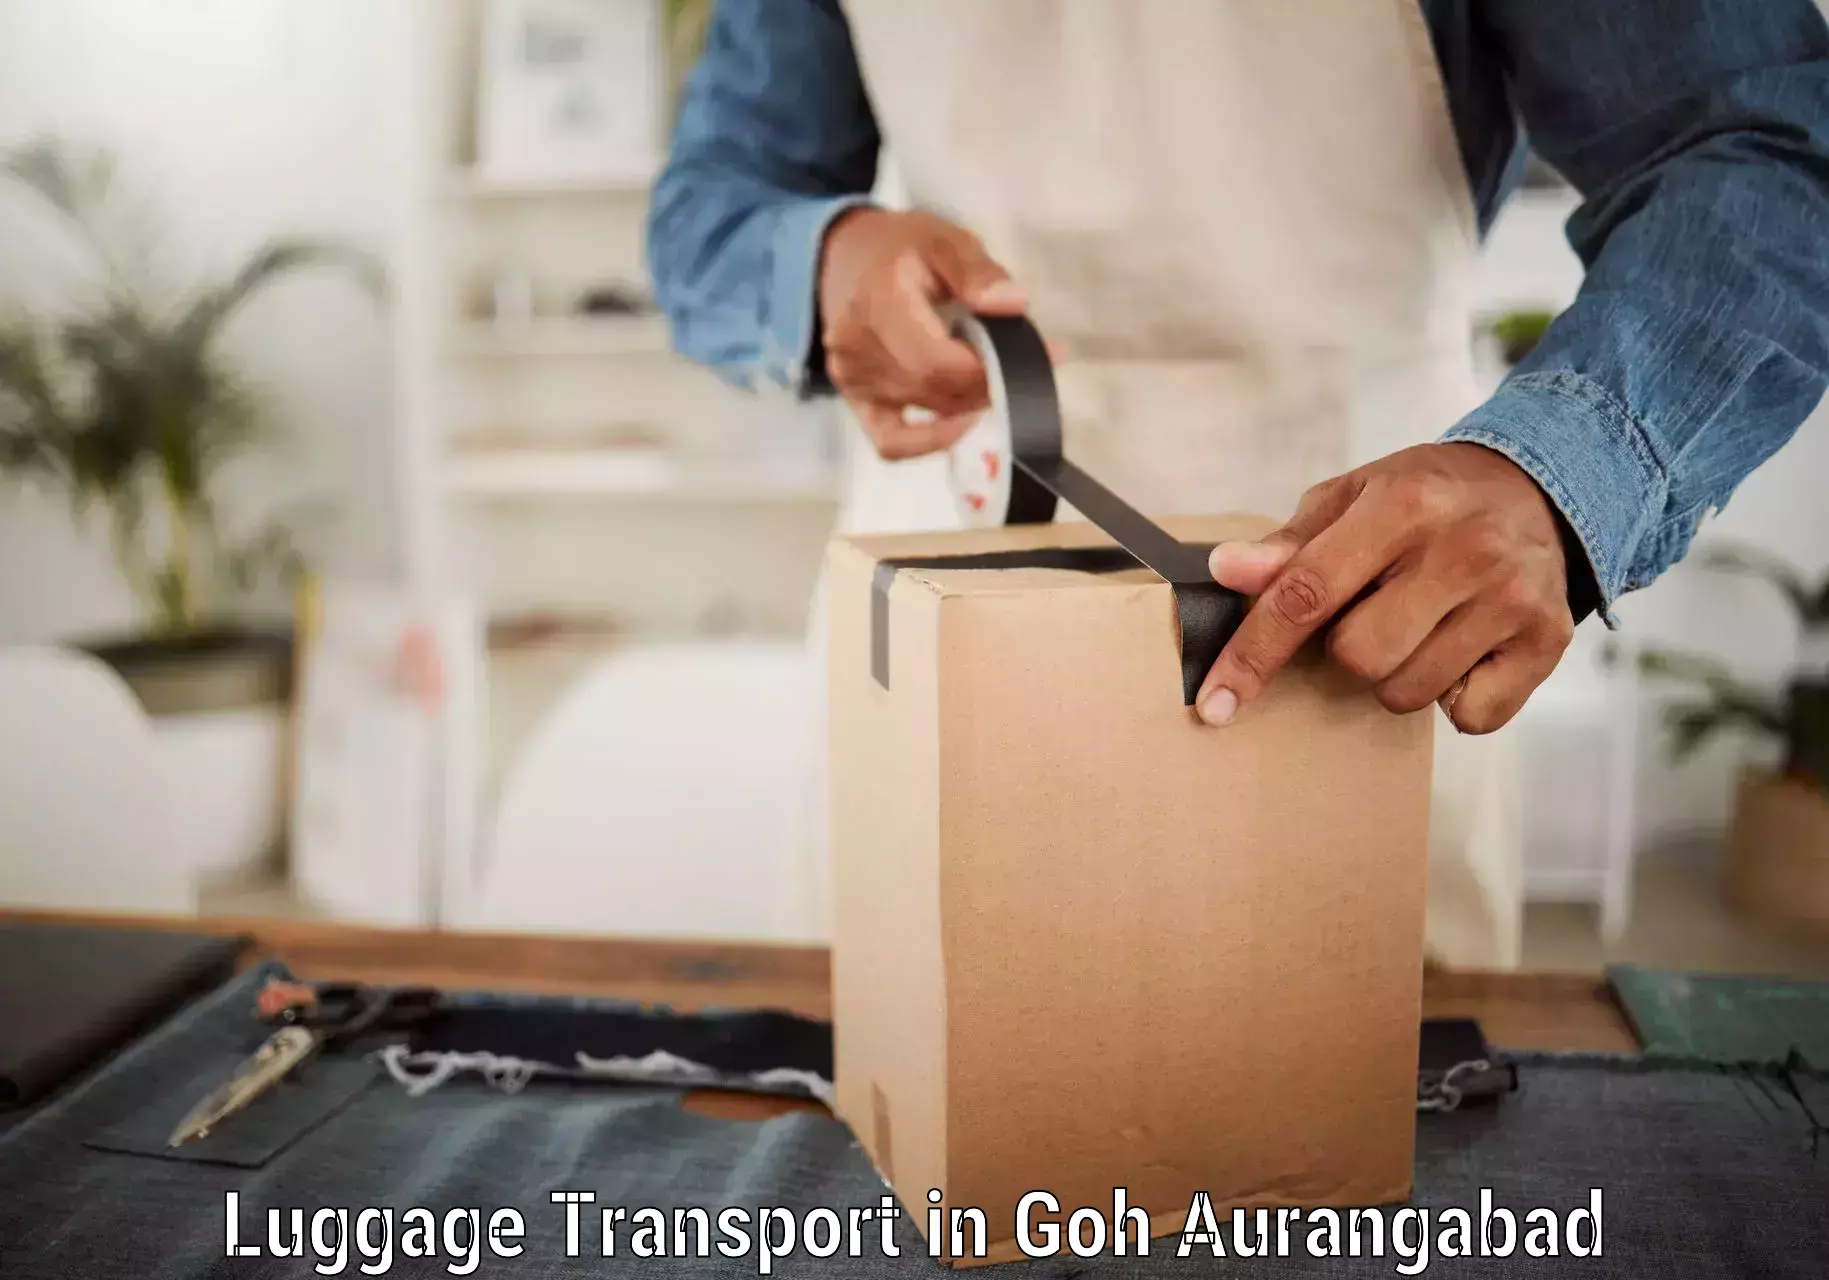 Doorstep luggage pickup in Goh Aurangabad